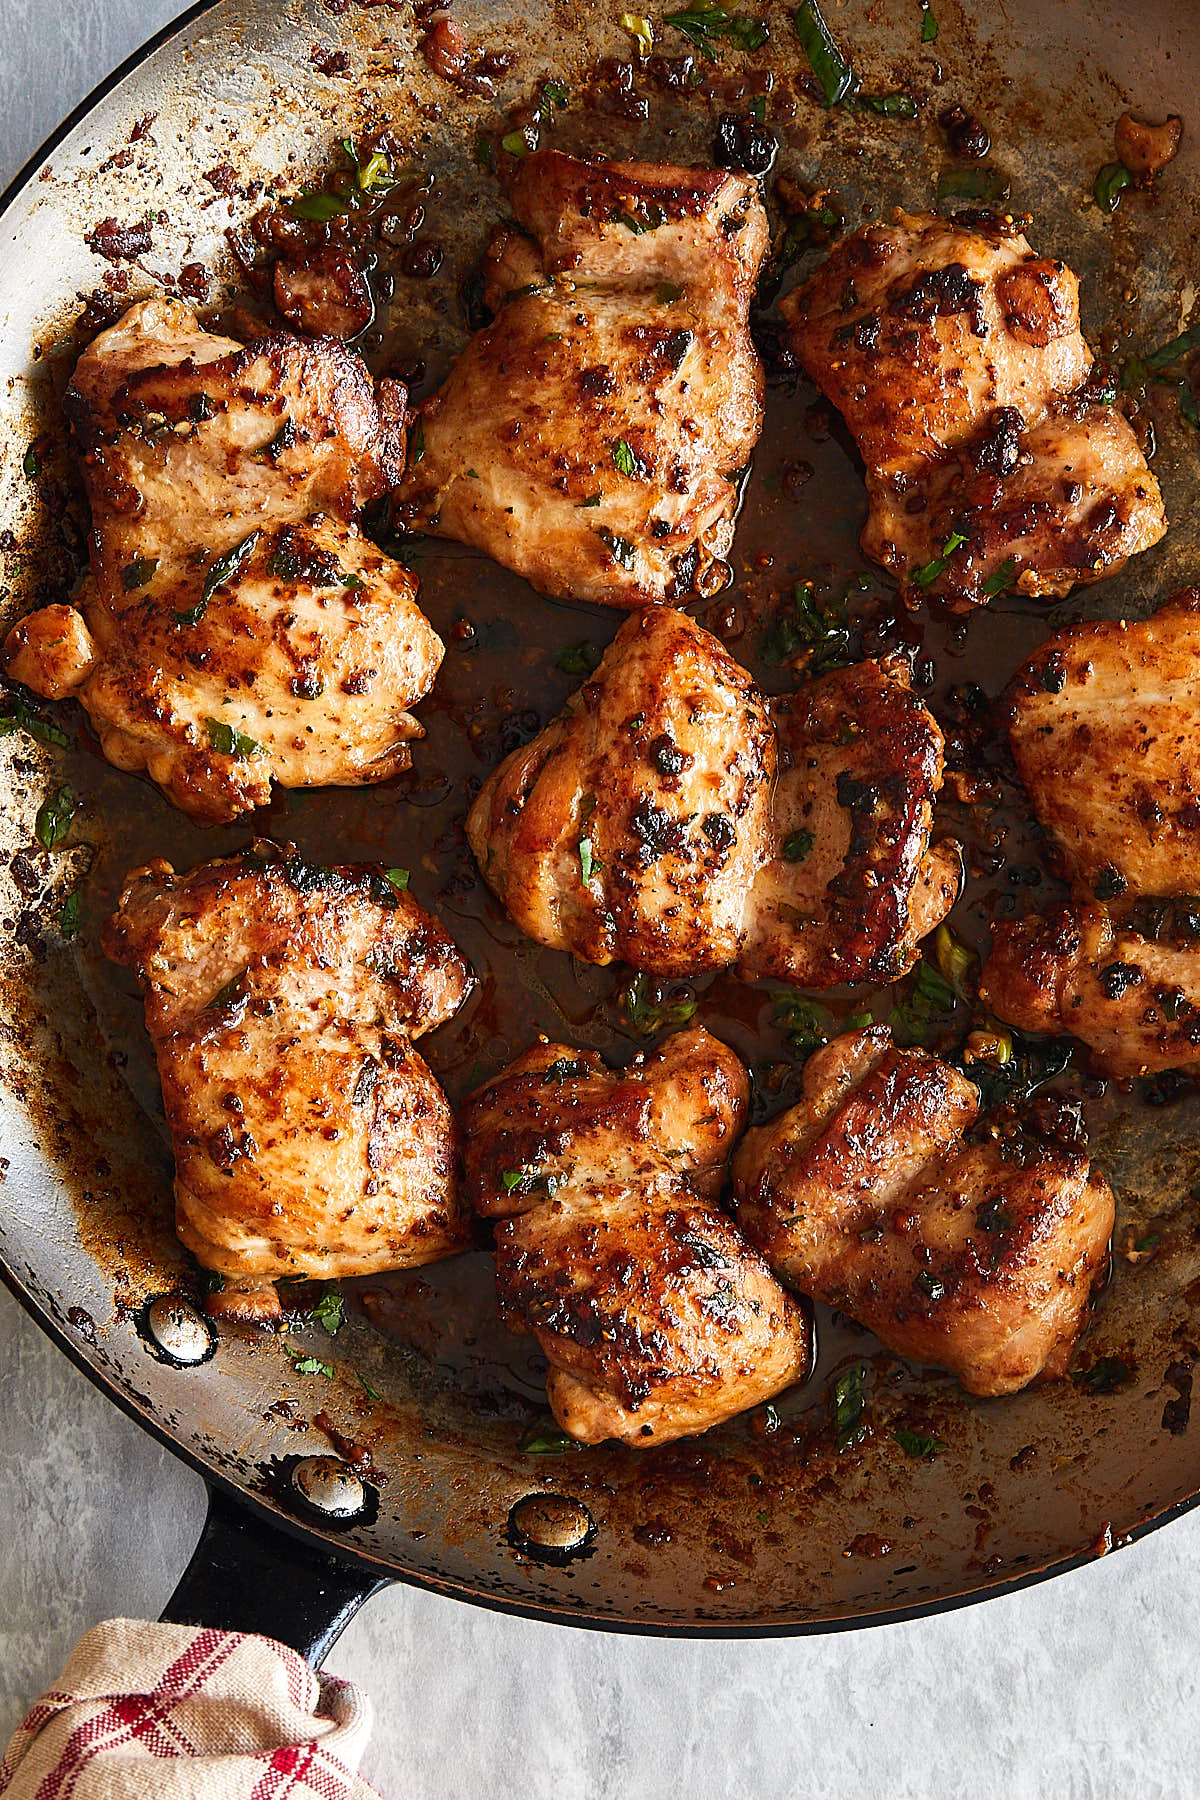 Golden brown, crispy boneless chicken thighs in a frying pan.